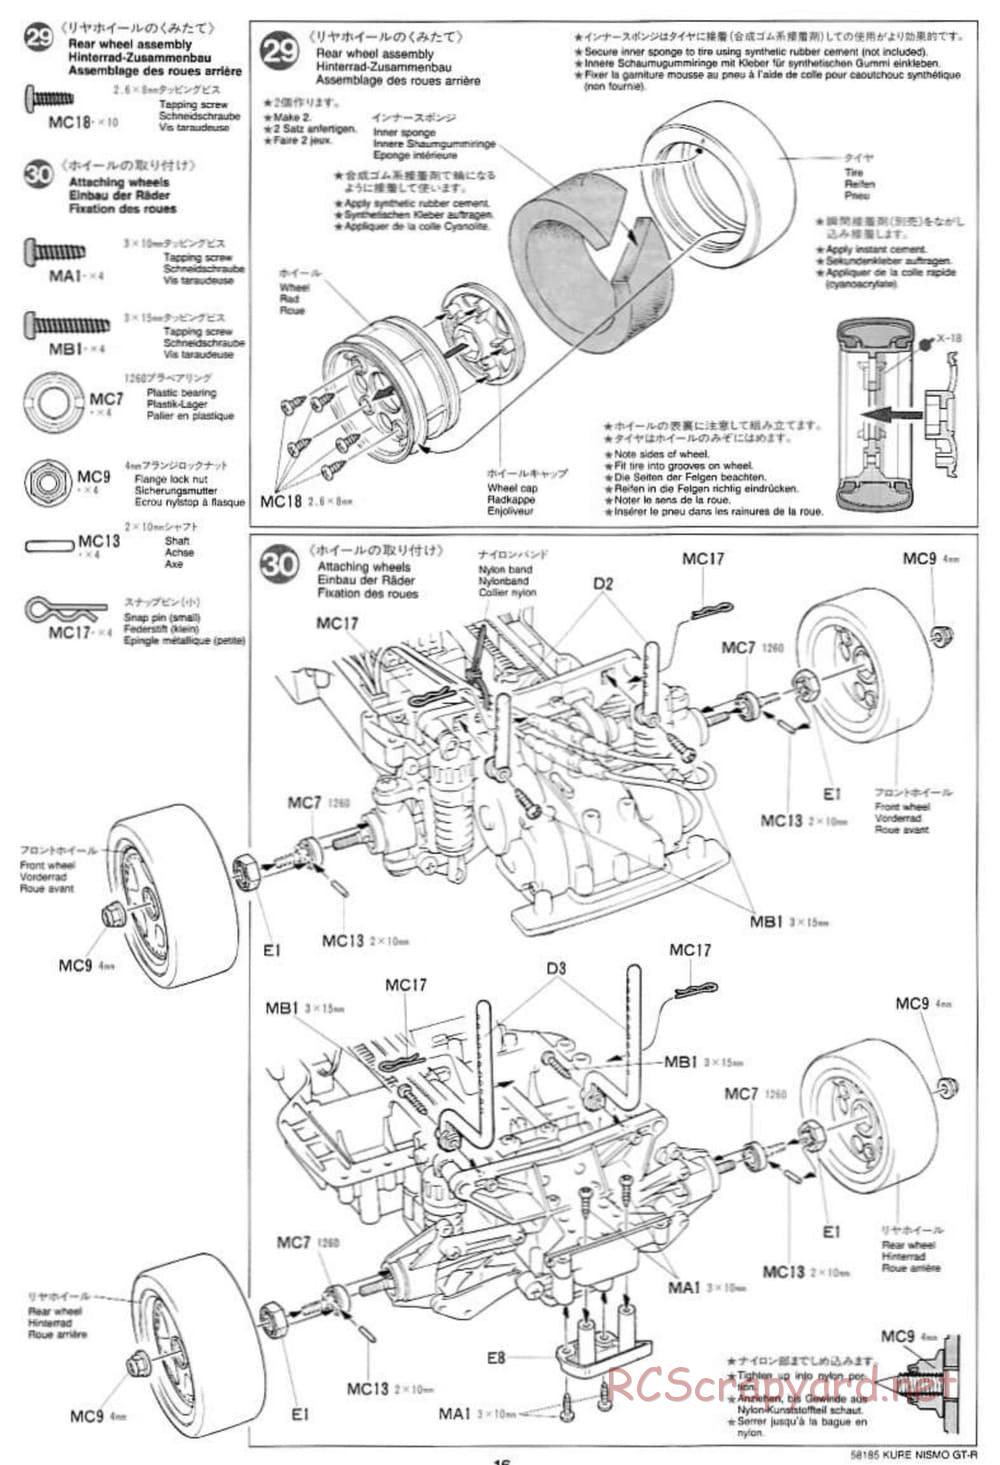 Tamiya - Kure Nismo GT-R - TA-03F Chassis - Manual - Page 16